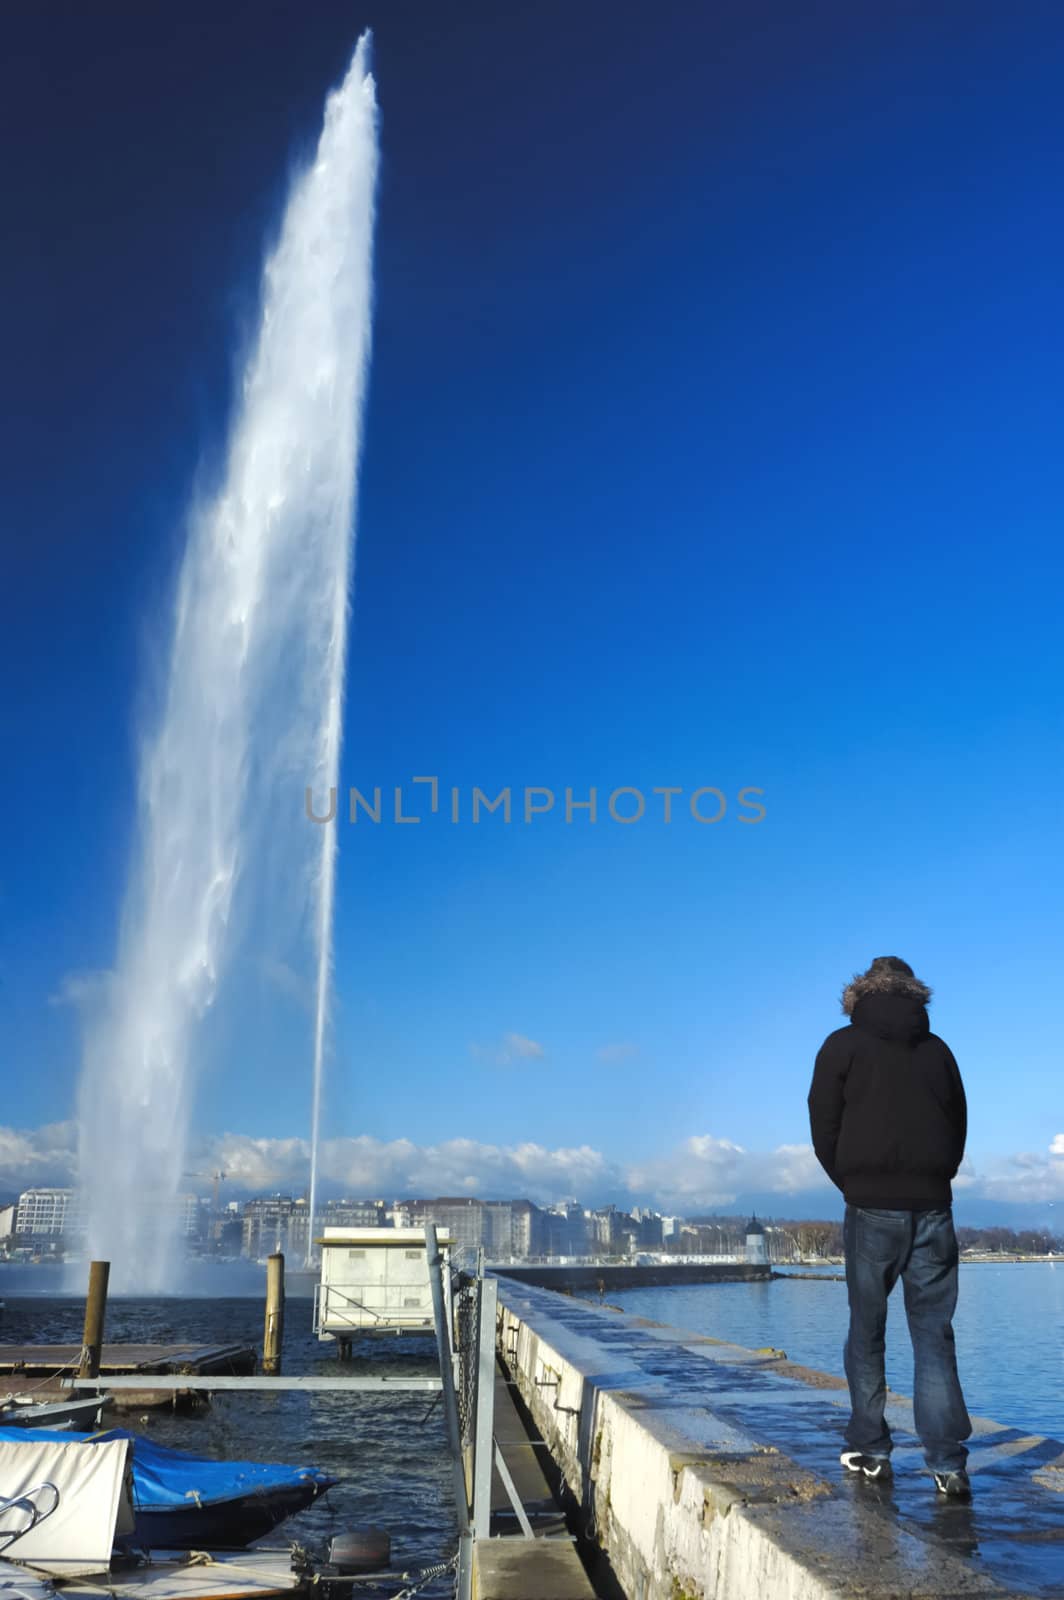 The famous Jet d'Eau fountain in Geneva, Switzerland with a figure walking towards it.